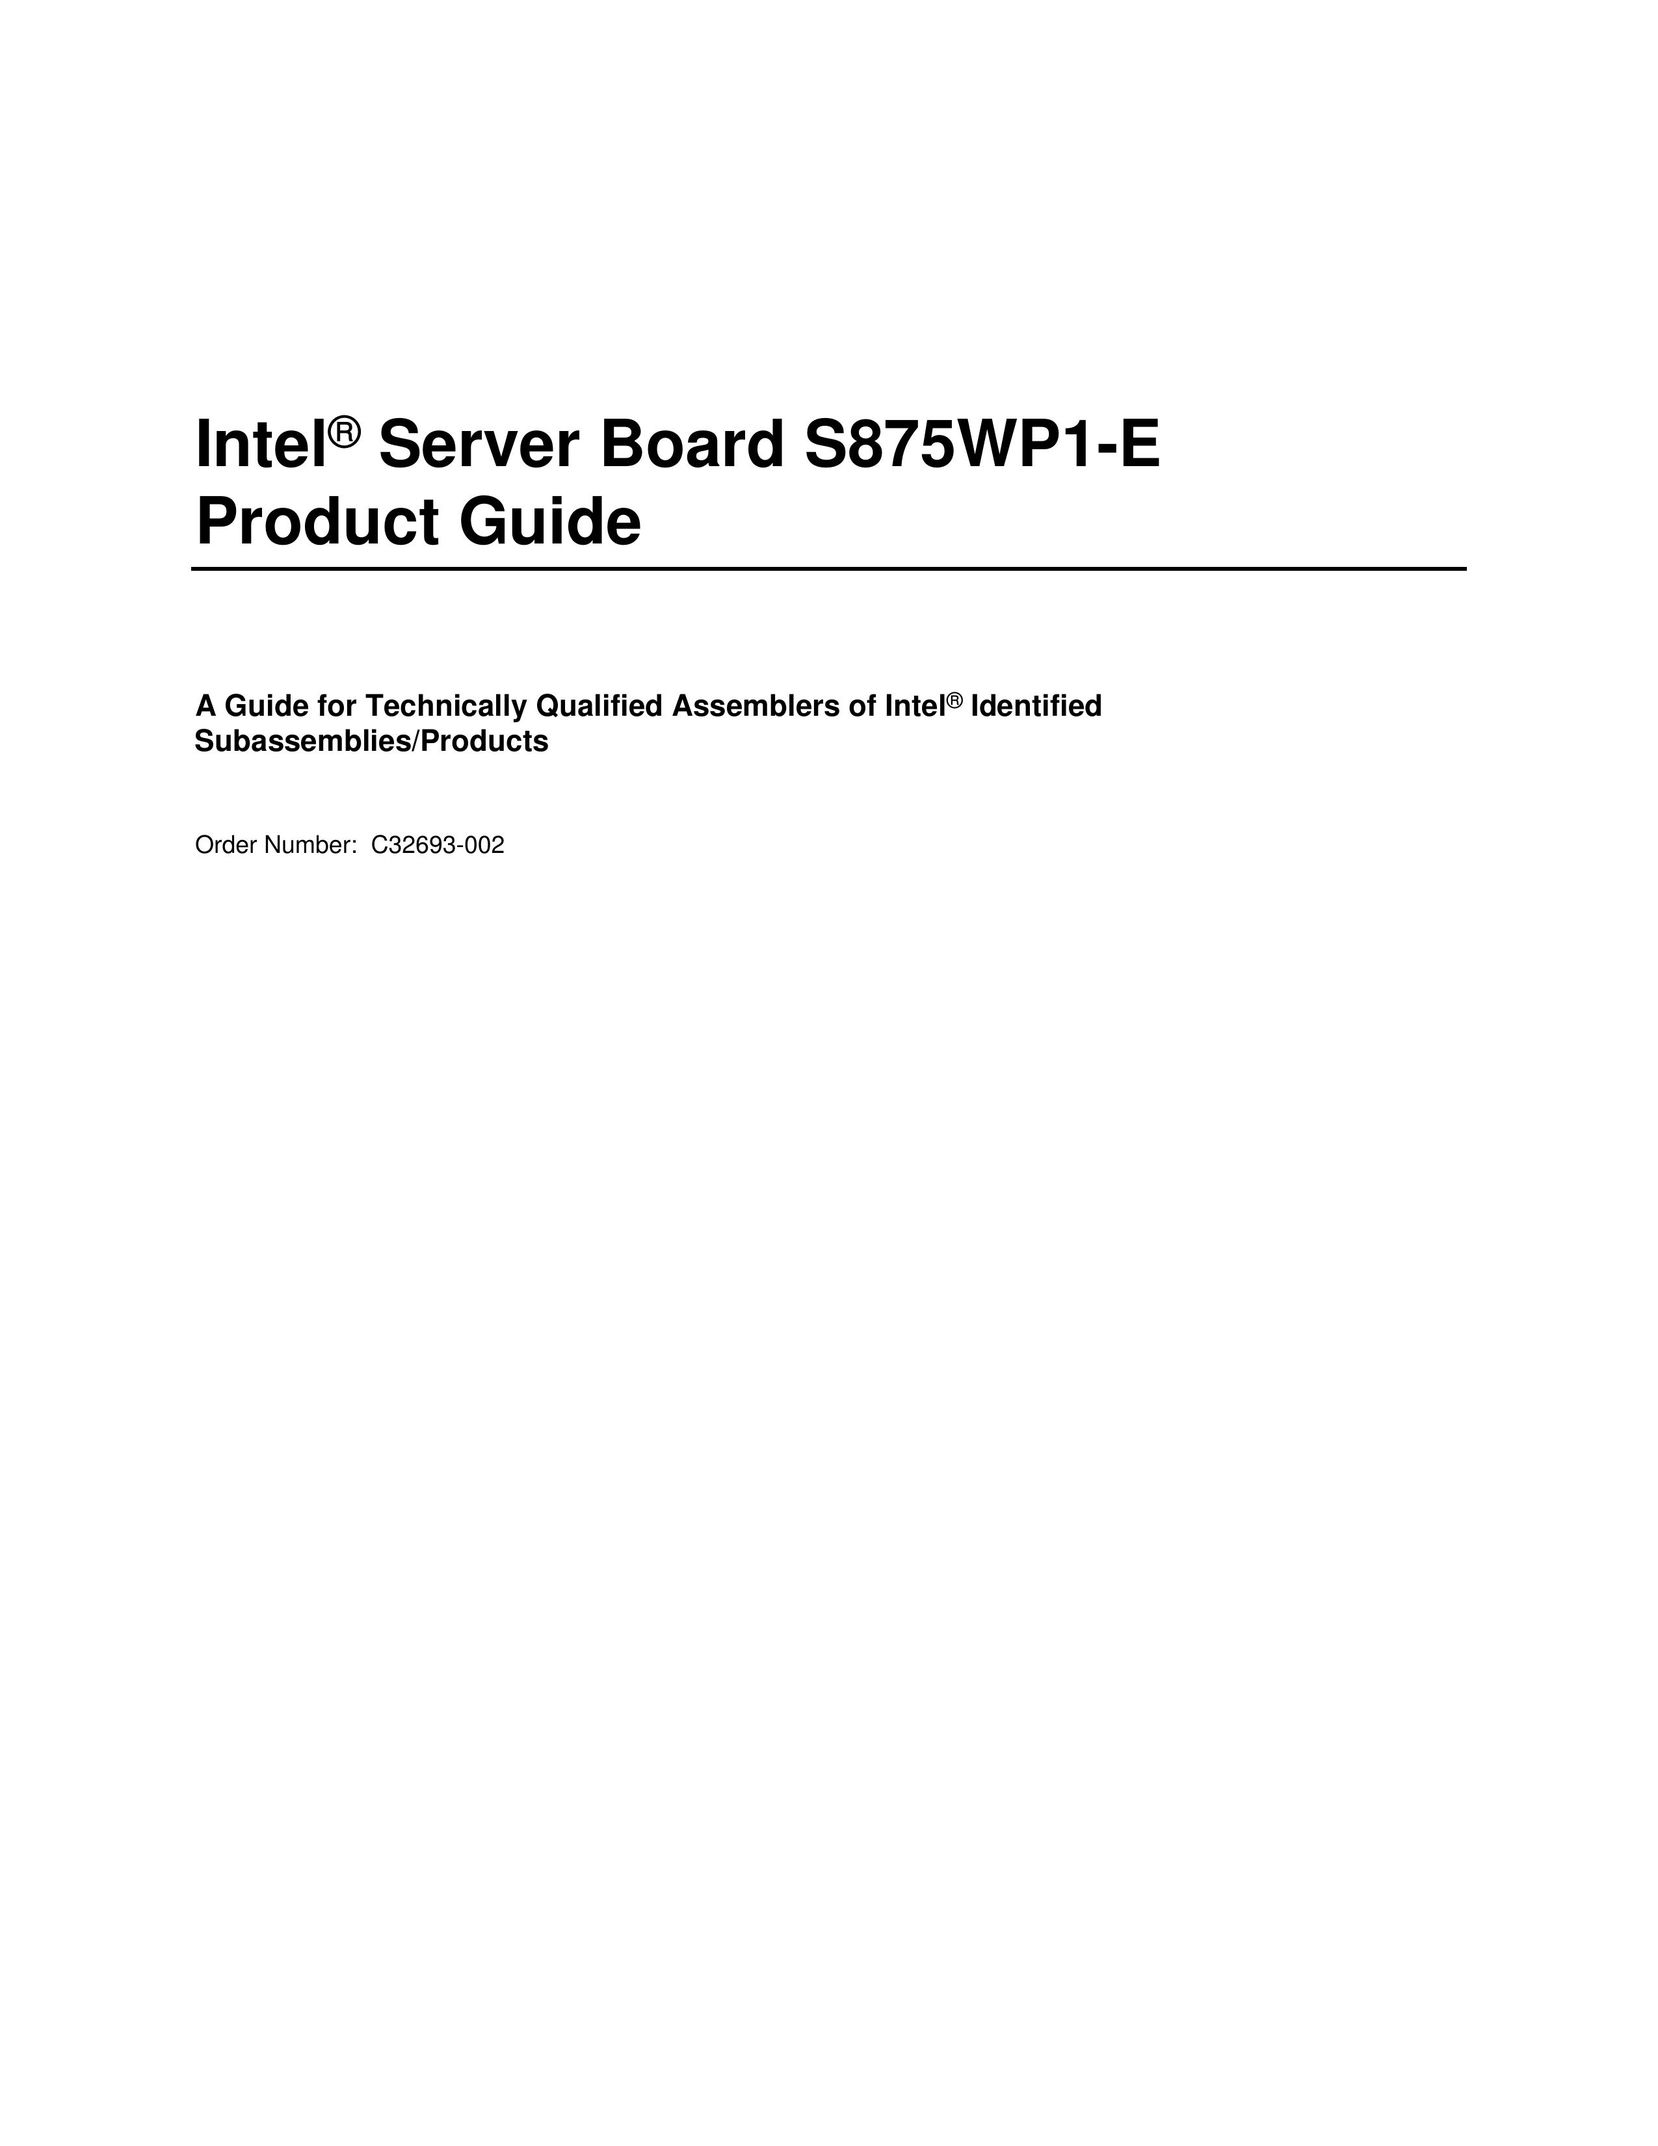 Intel S875WP1-E Server User Manual